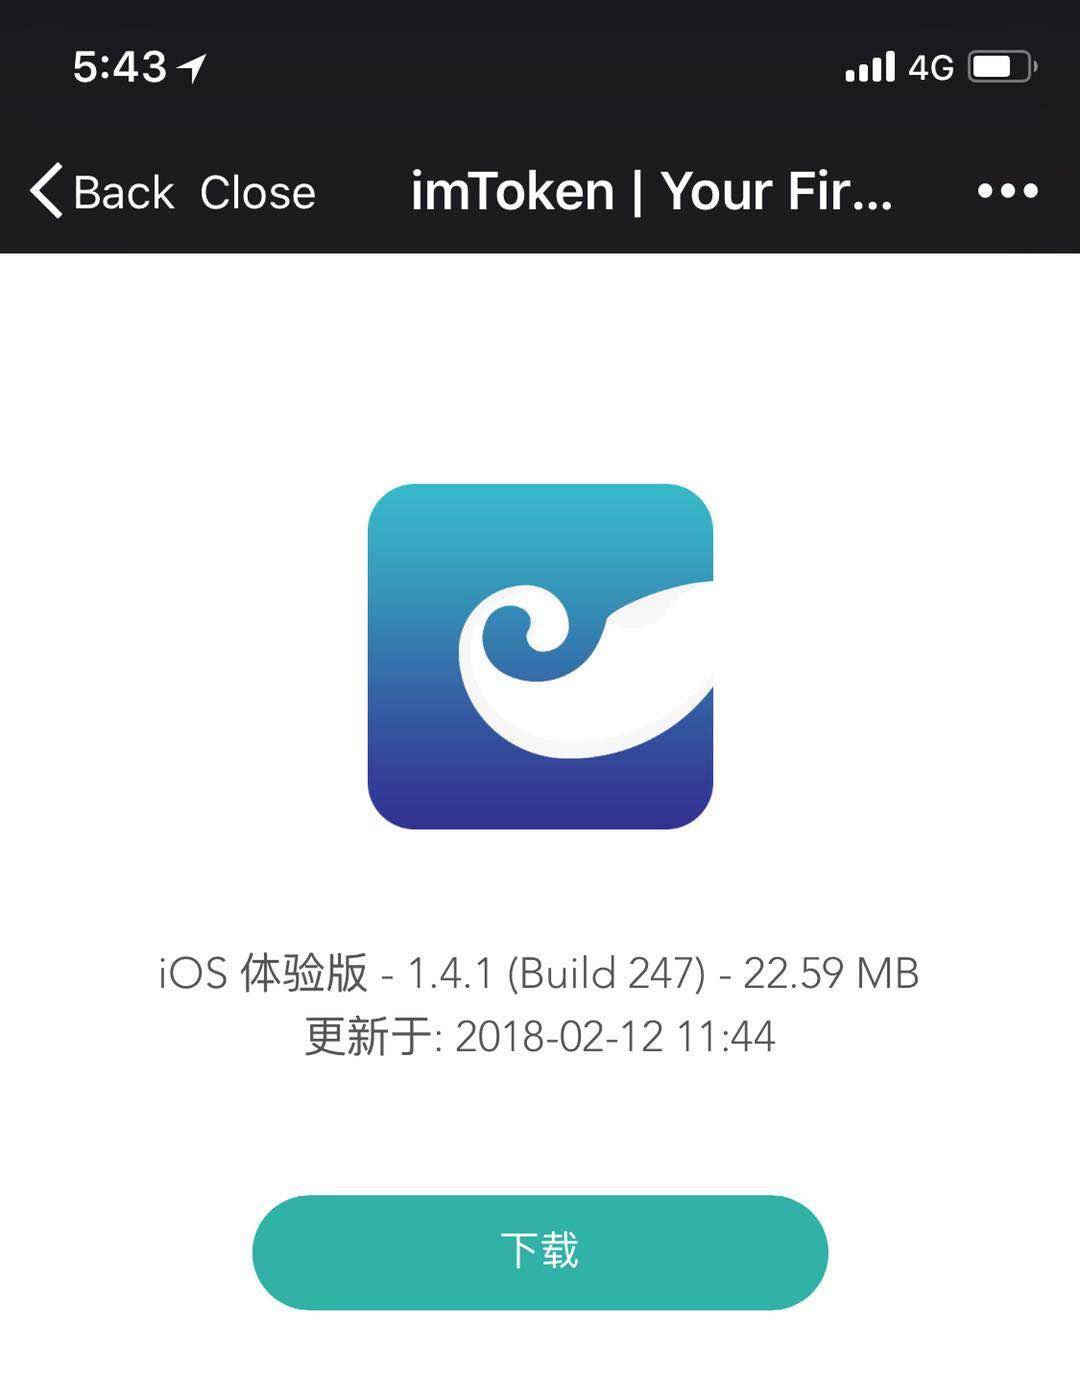 imtoken2.0下载官网苹果版的简单介绍